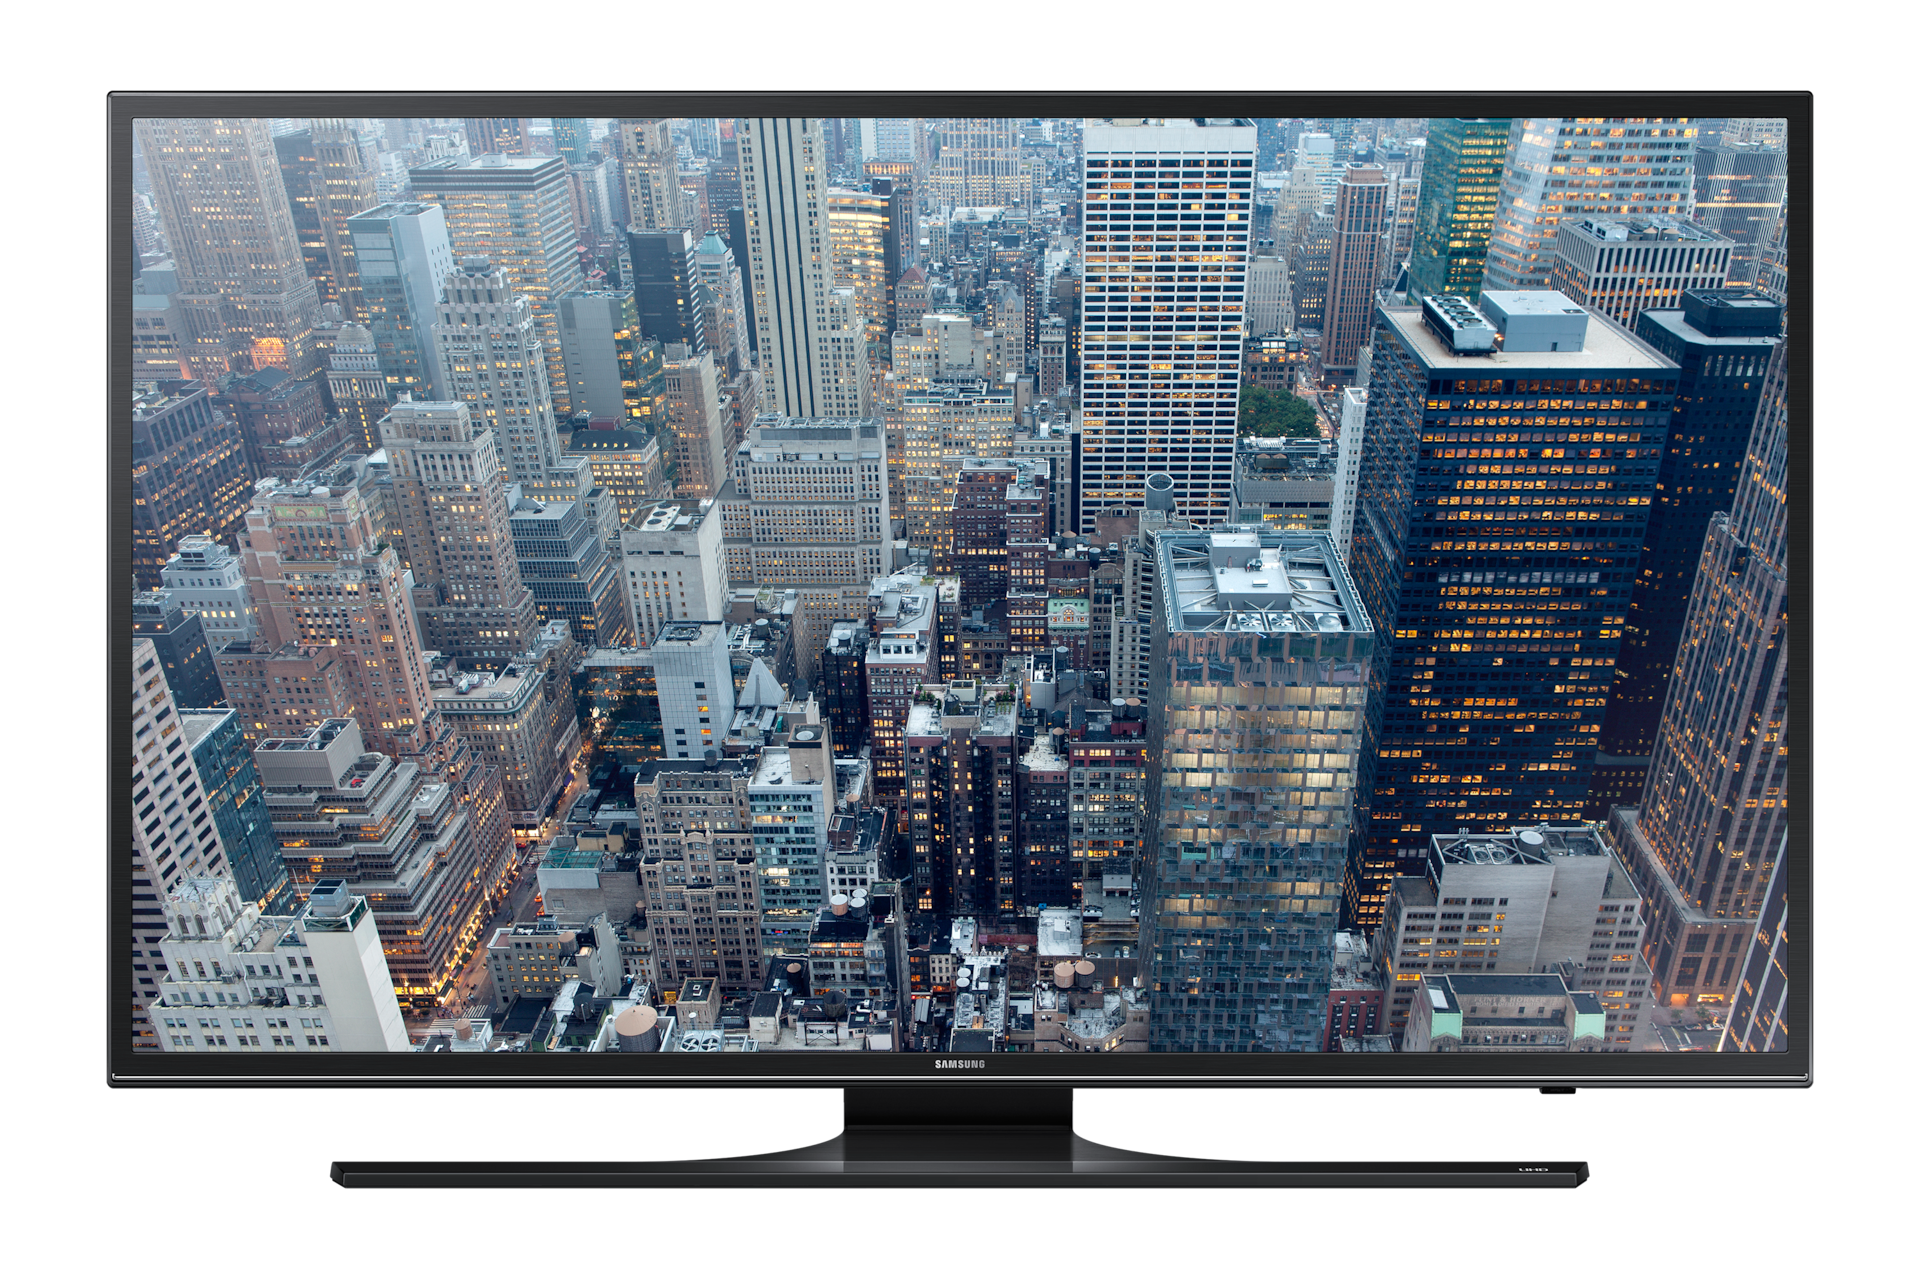 TV Samsung 40 Pulgadas 4K Ultra HD Smart TV LED